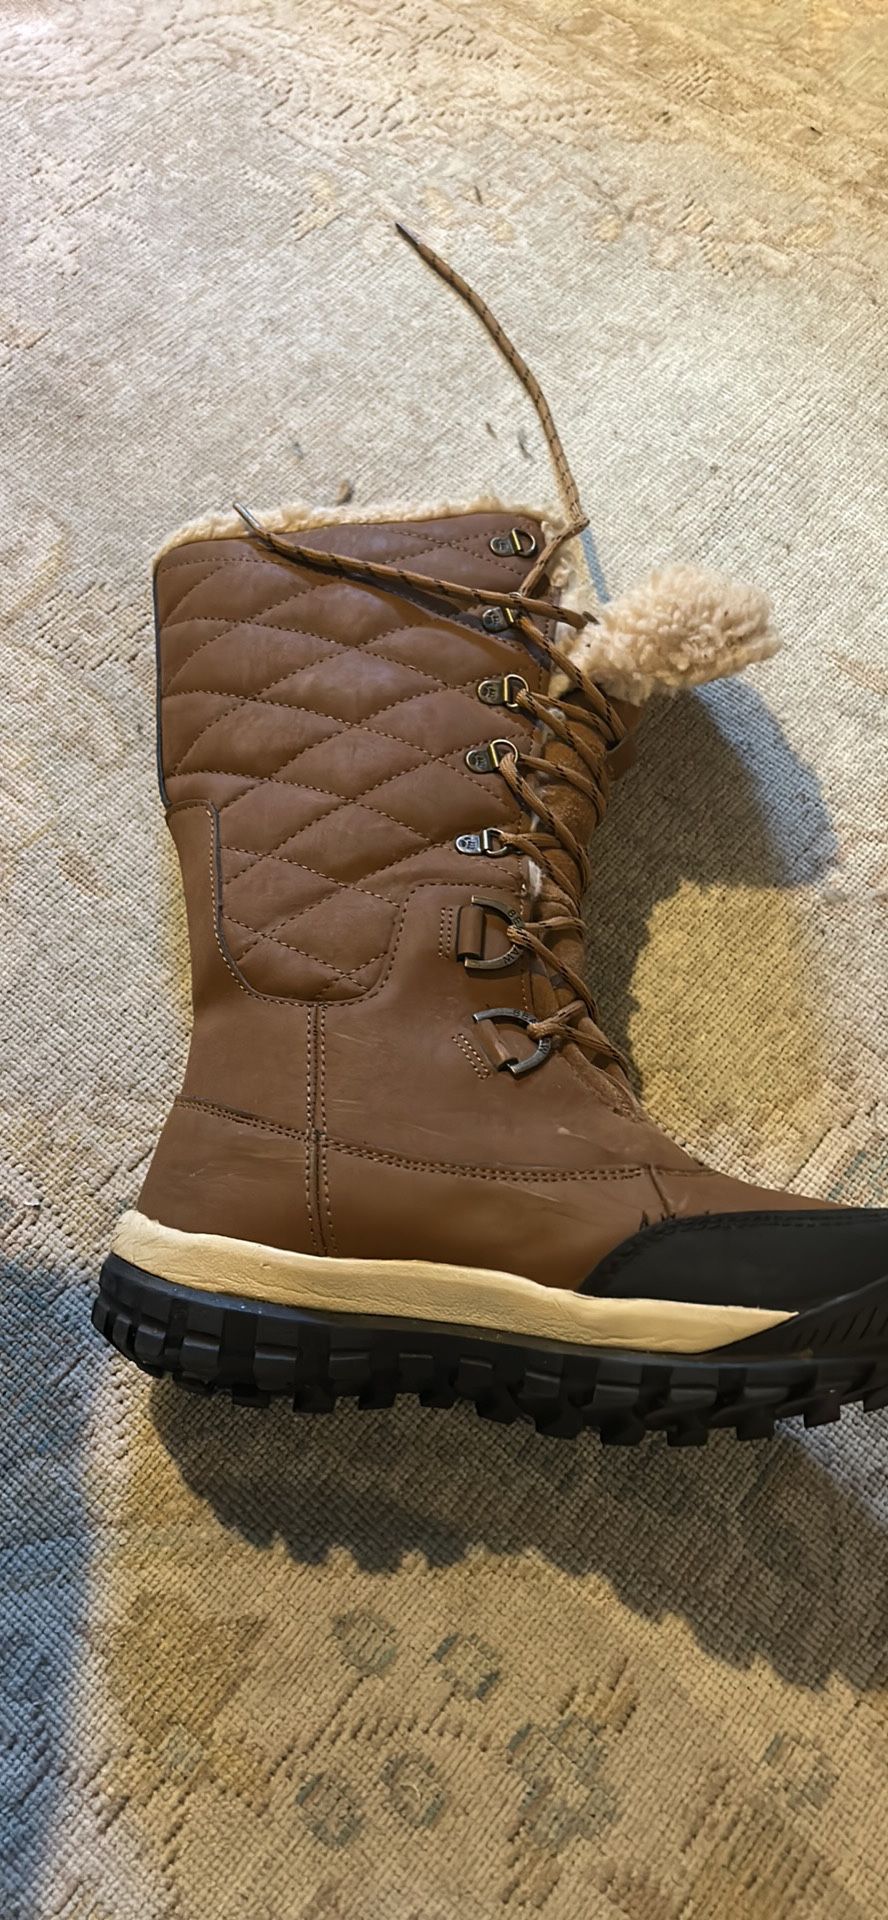 Women’s BearPaw Snow Boots 